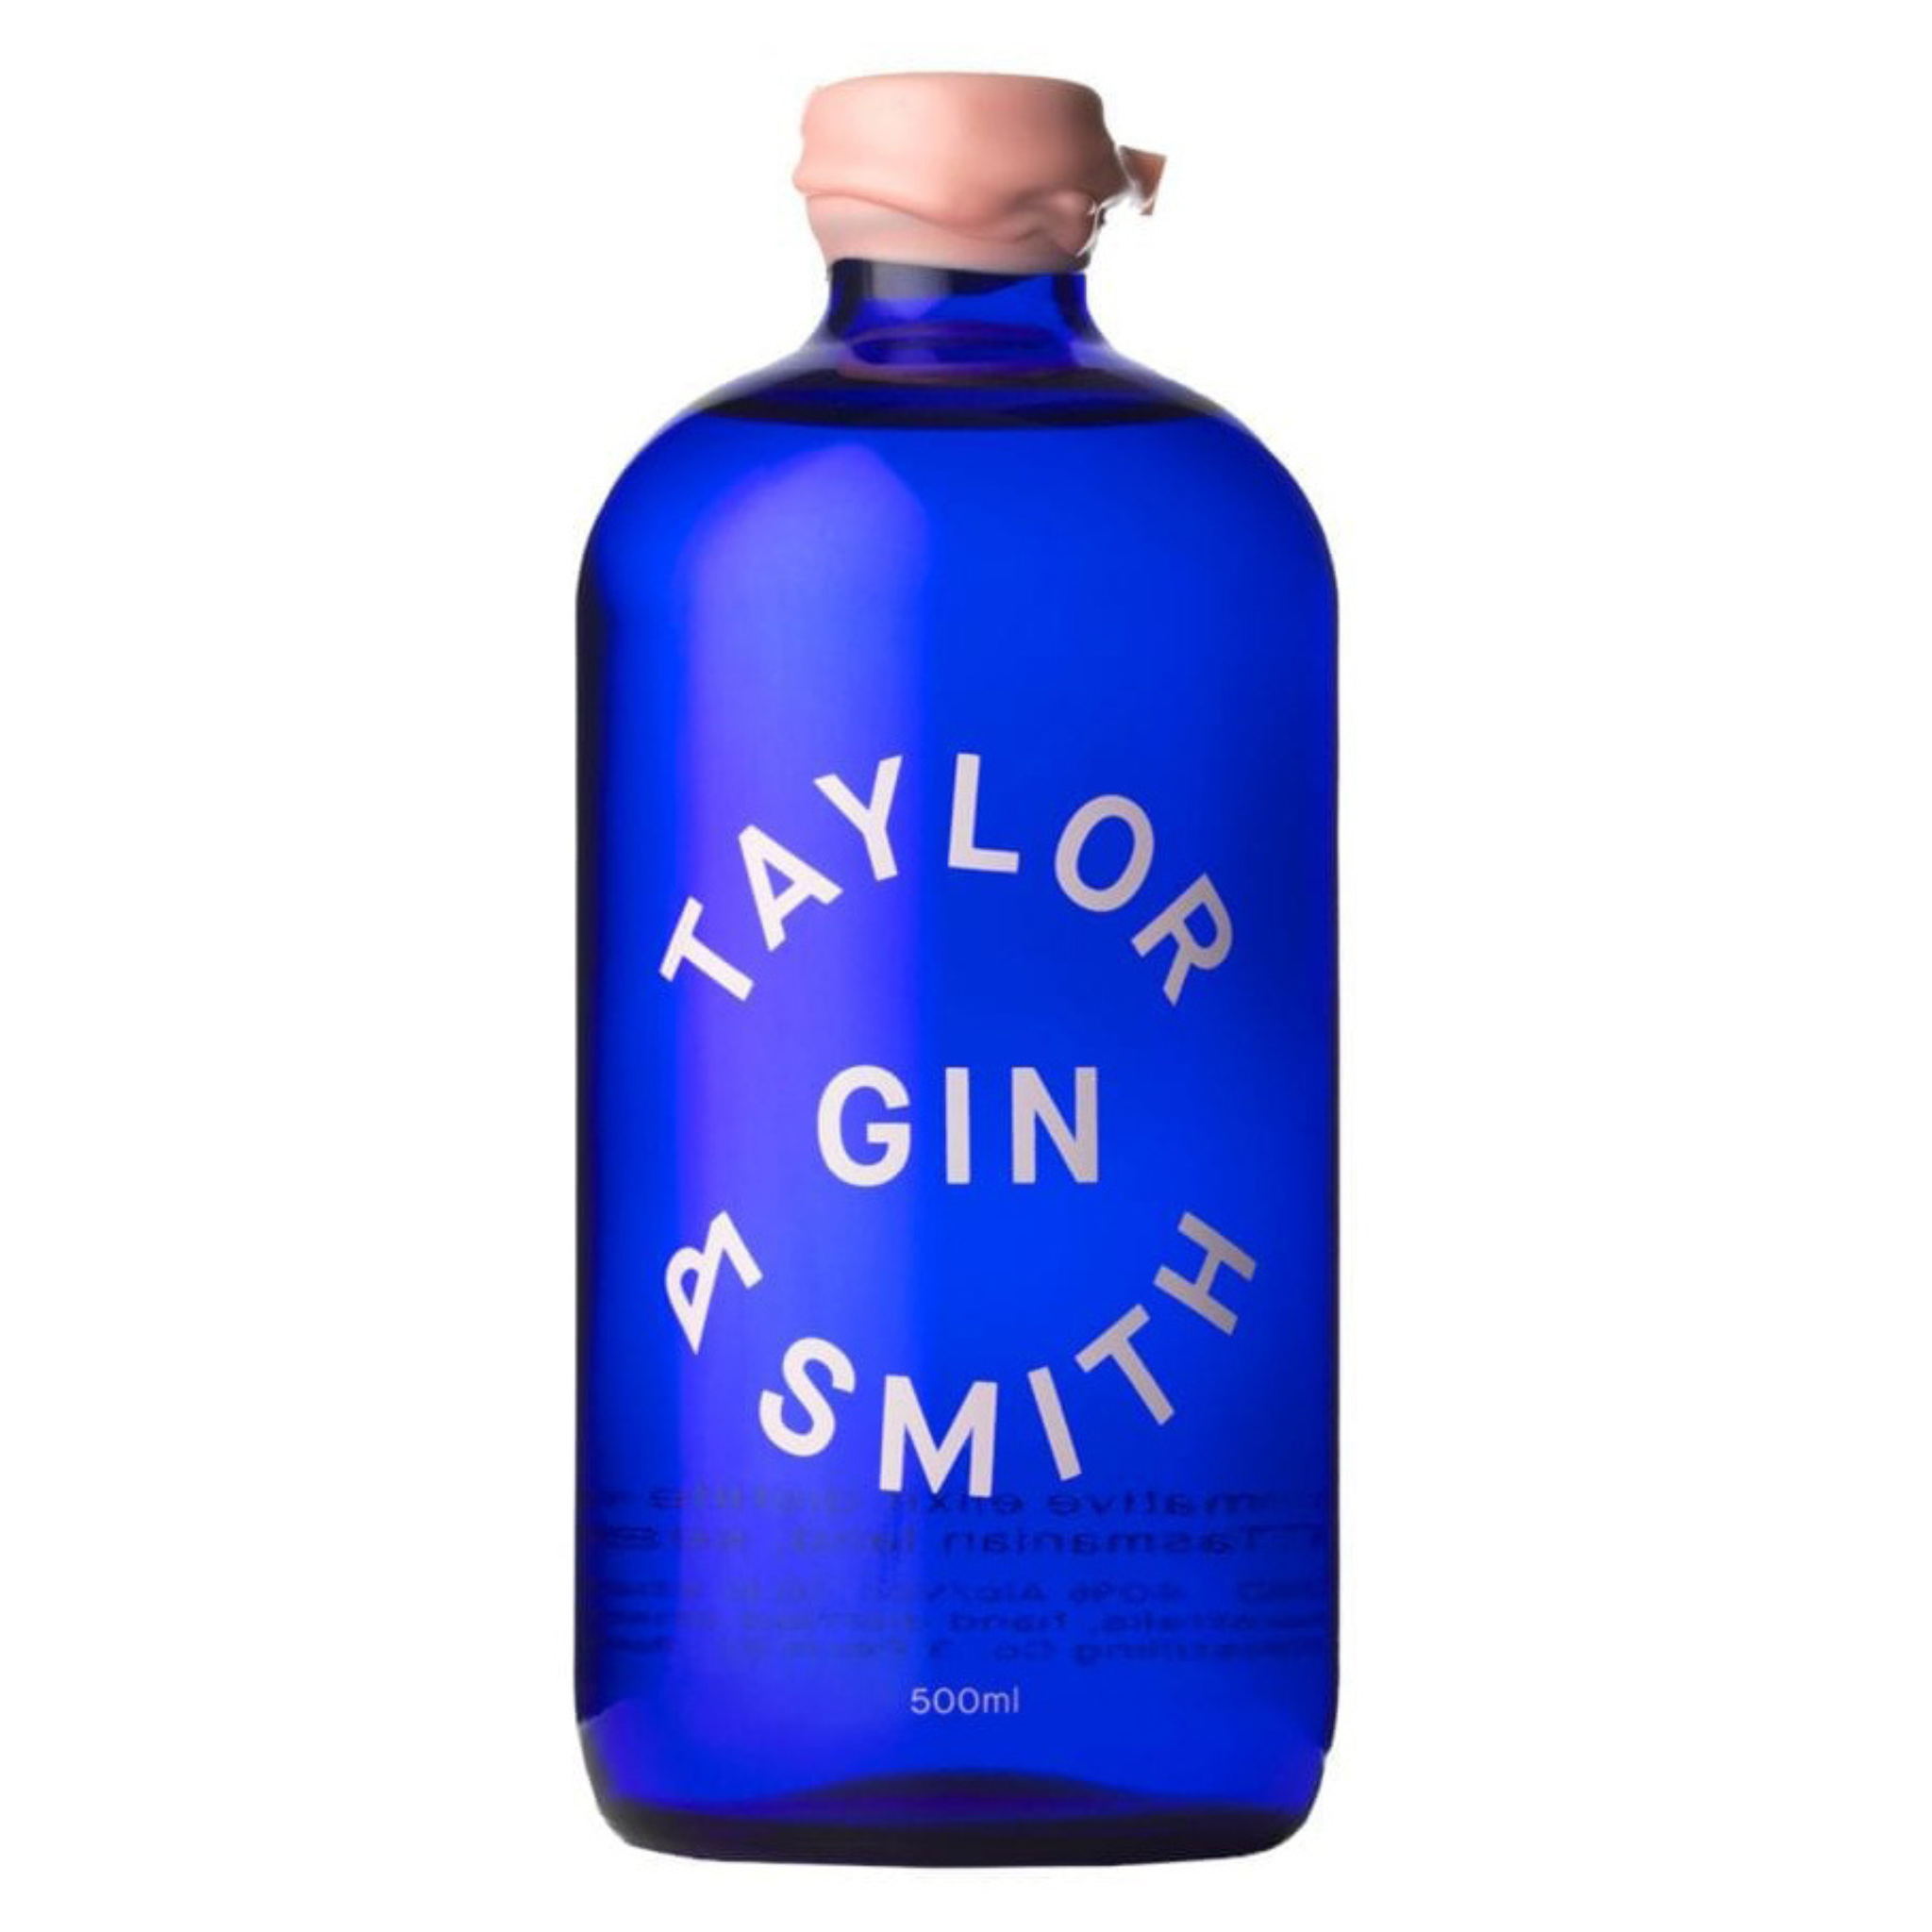 Taylor & Smith Gin 500mL